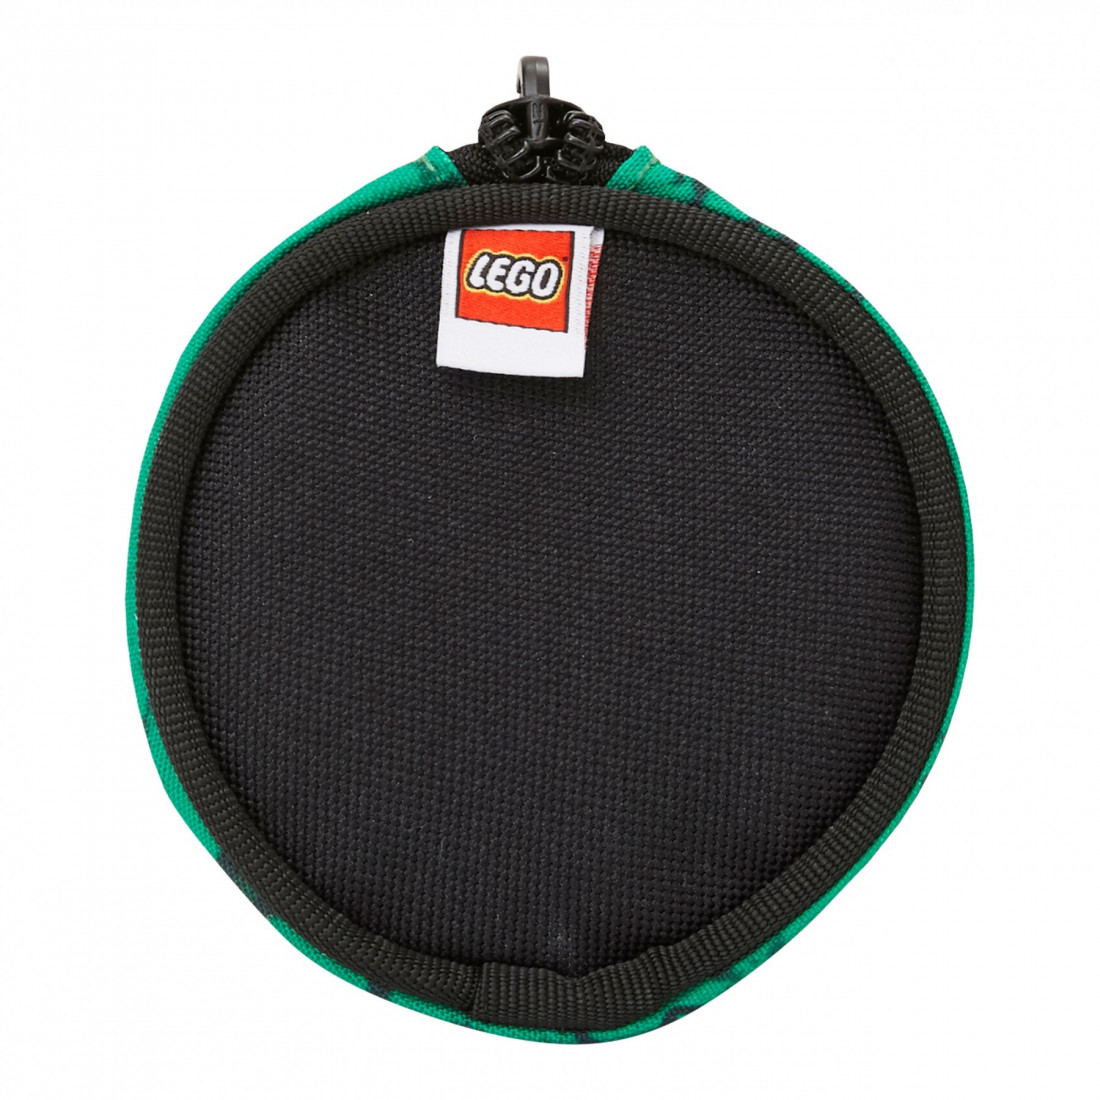 LEGO ΚΑΣΕΤΙΝΑ ΒΑΡΕΛΑΚΙ: NINJAGO GREEN 10050 -2101